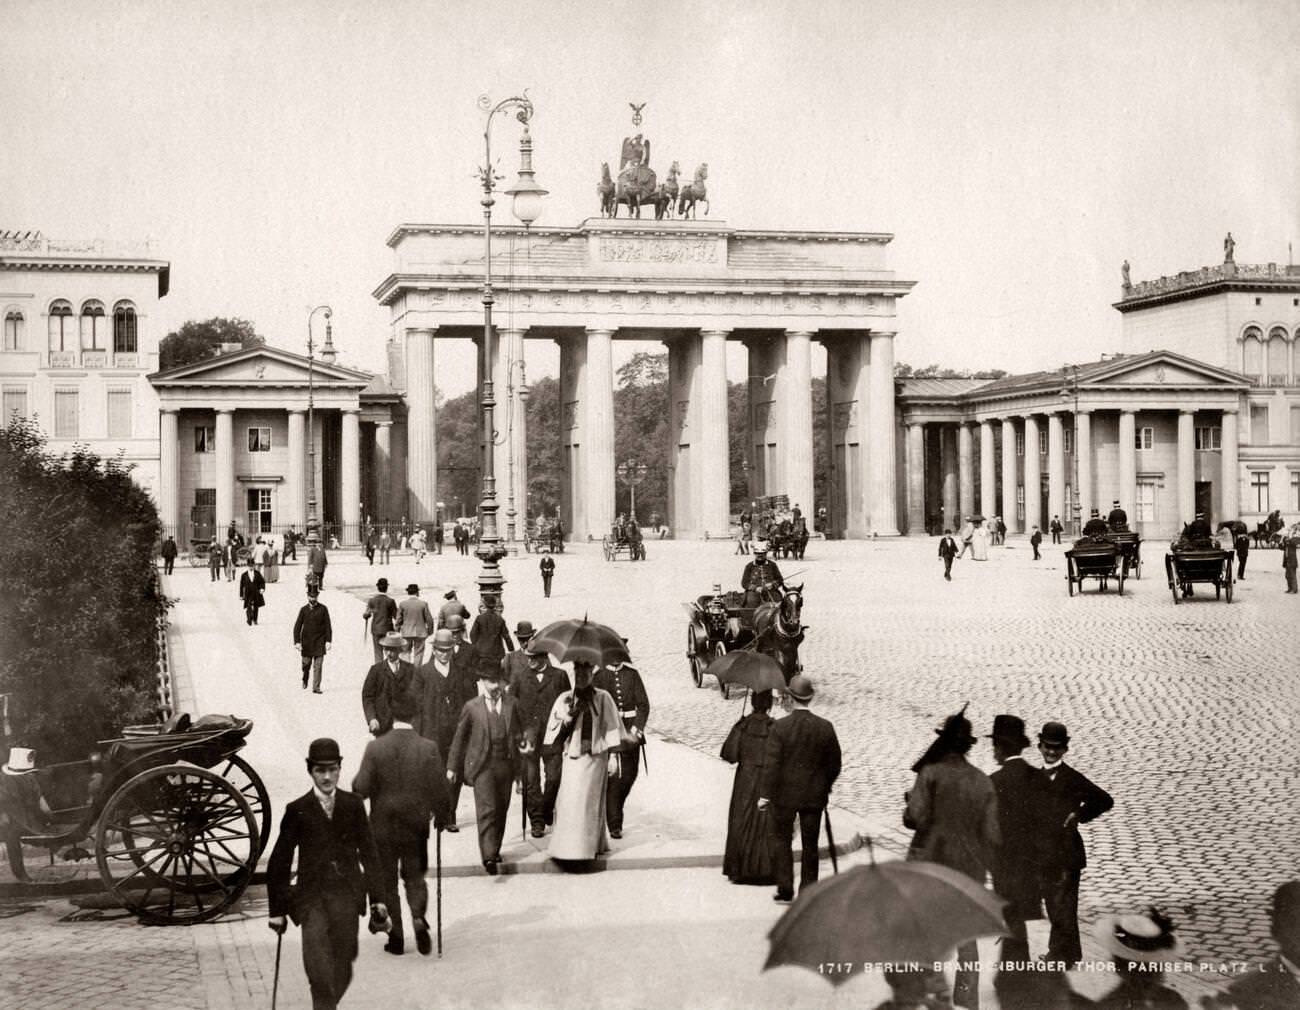 Brandenburg Gate, Berlin, Germany, 1890s.